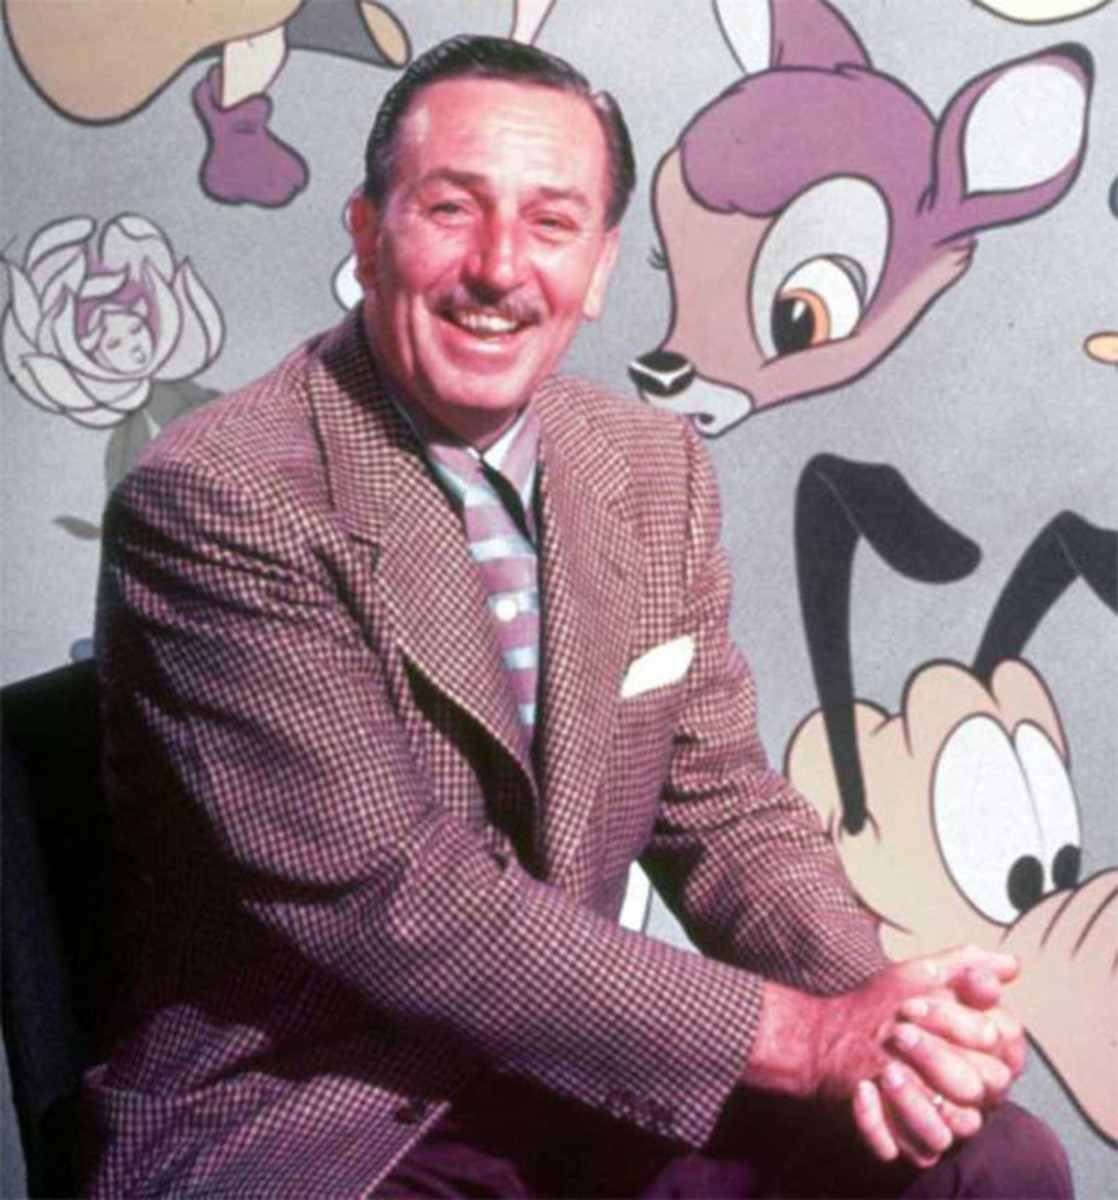 Walt Disney: Legendary American Entrepreneur and Animated Film Maker